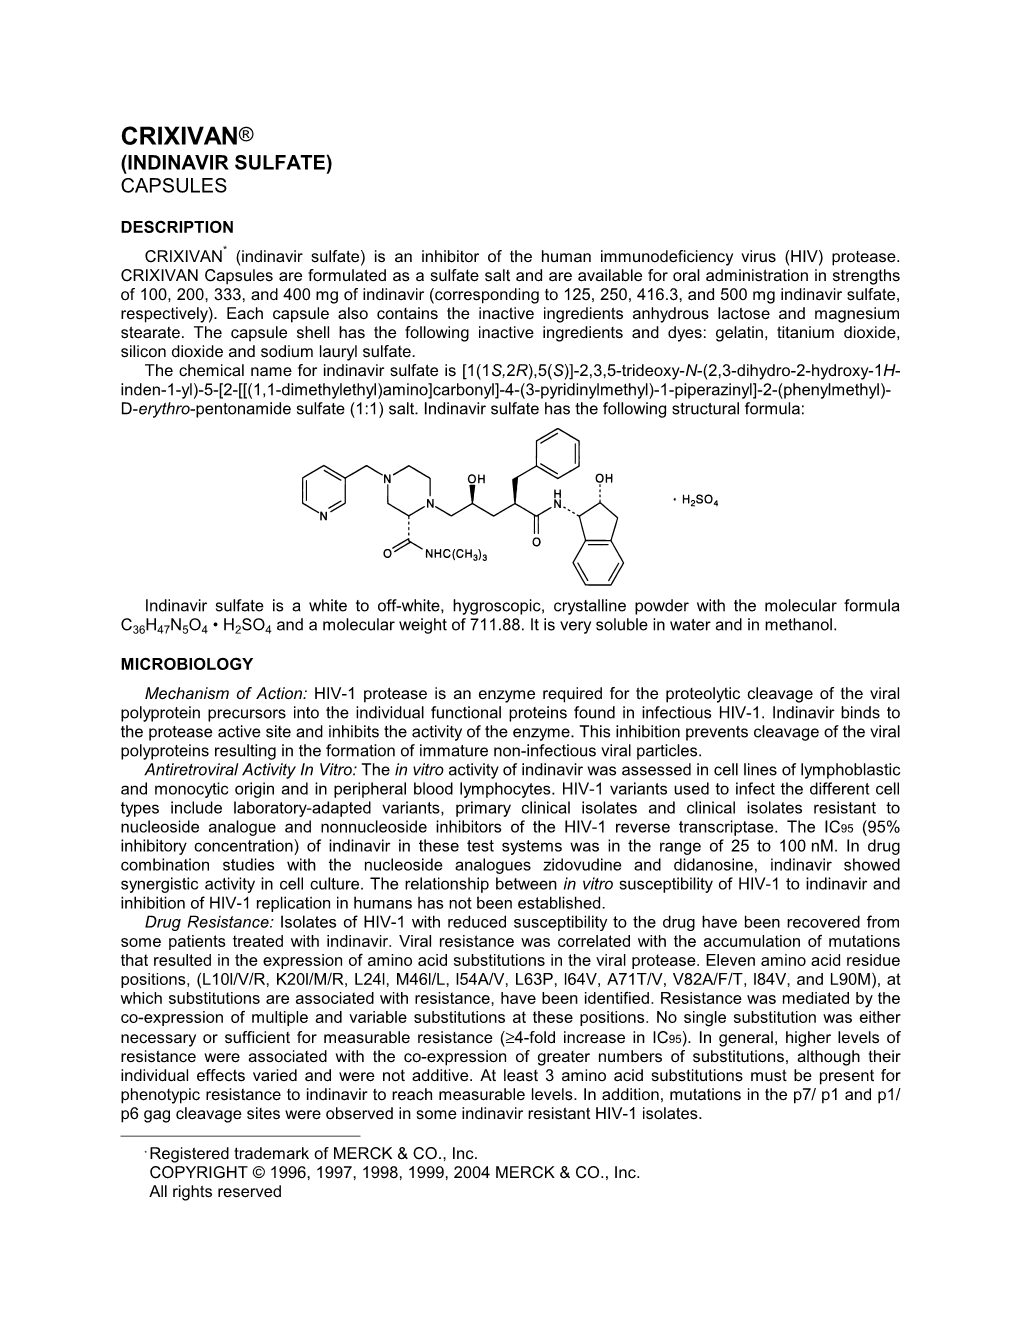 Crixivan® (Indinavir Sulfate) Capsules